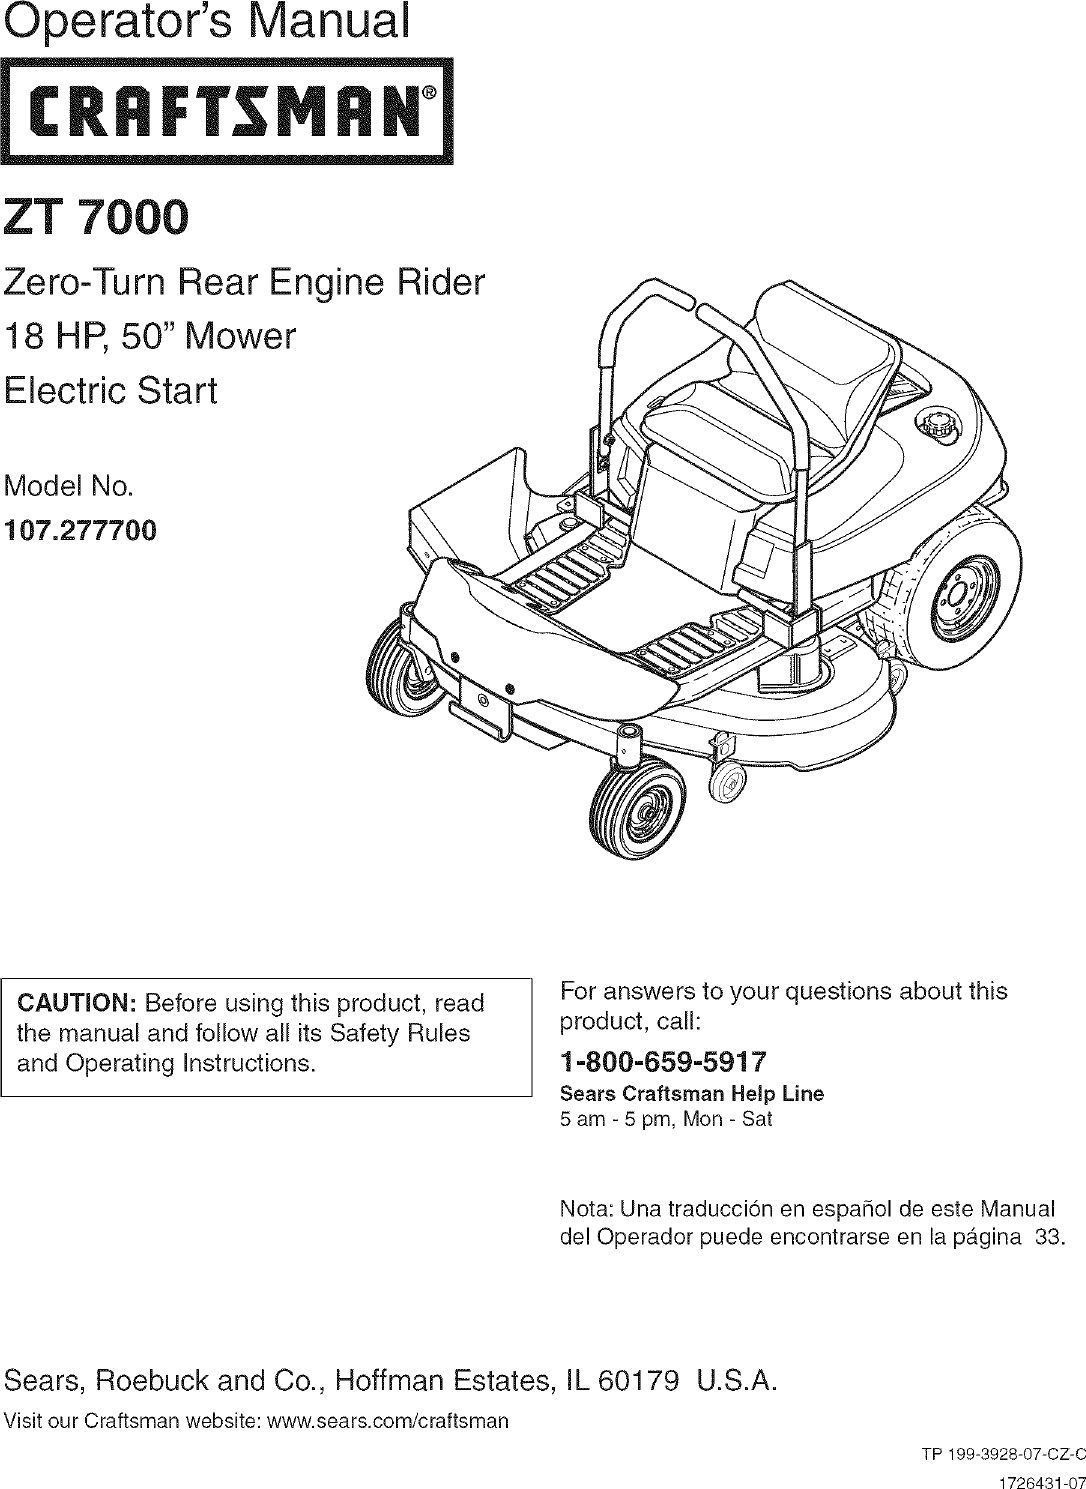 Craftsman Zt 7000 107 2777 Users Manual  Ztl7000 Wiring Diagram.pdf    UserManual.wiki